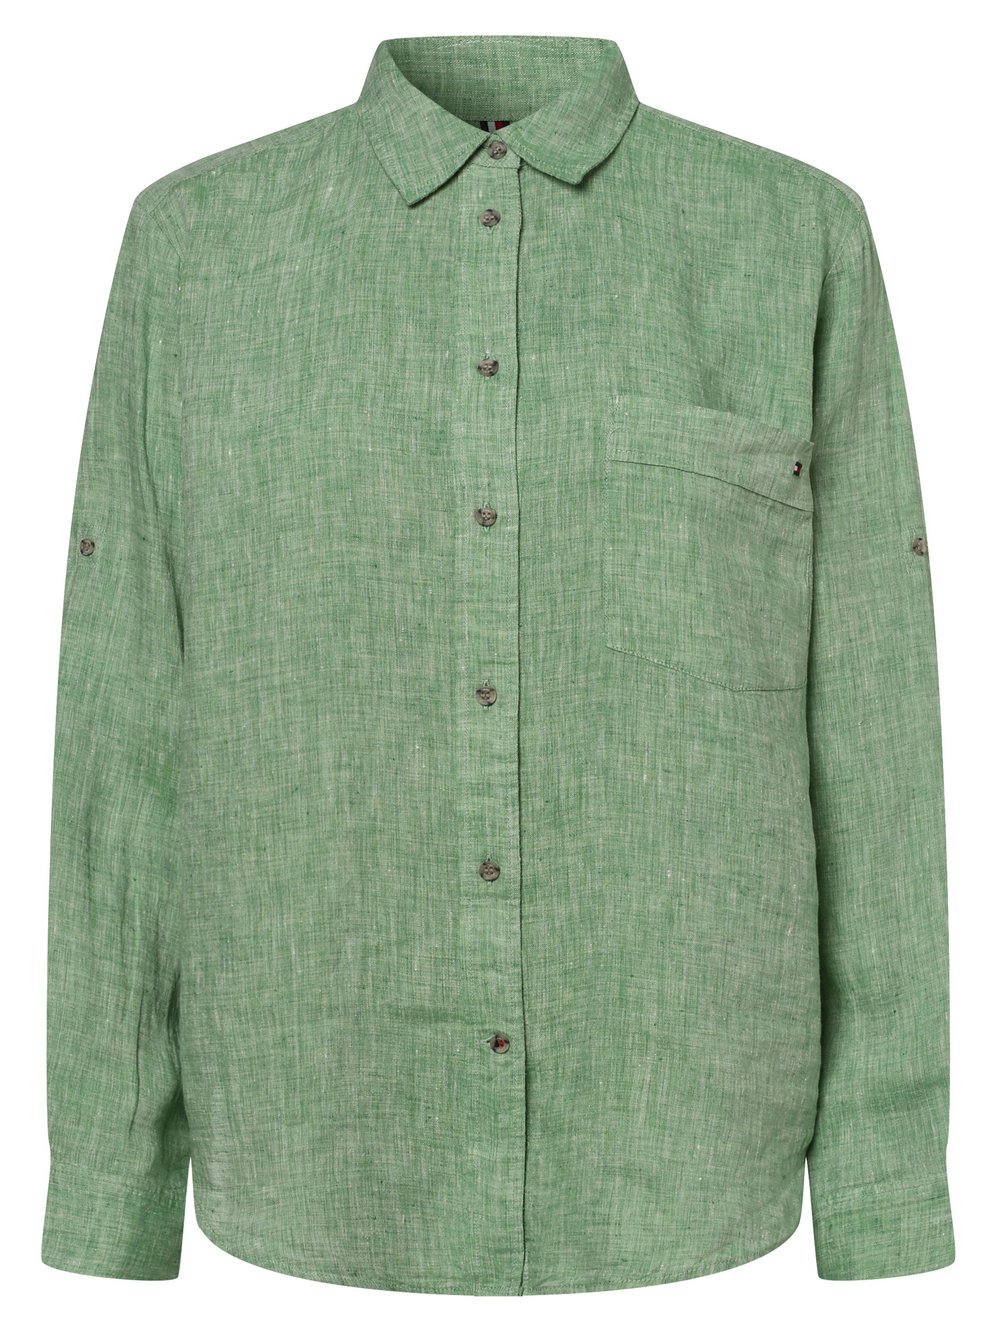 Tommy Hilfiger - Damska bluzka lniana, zielony